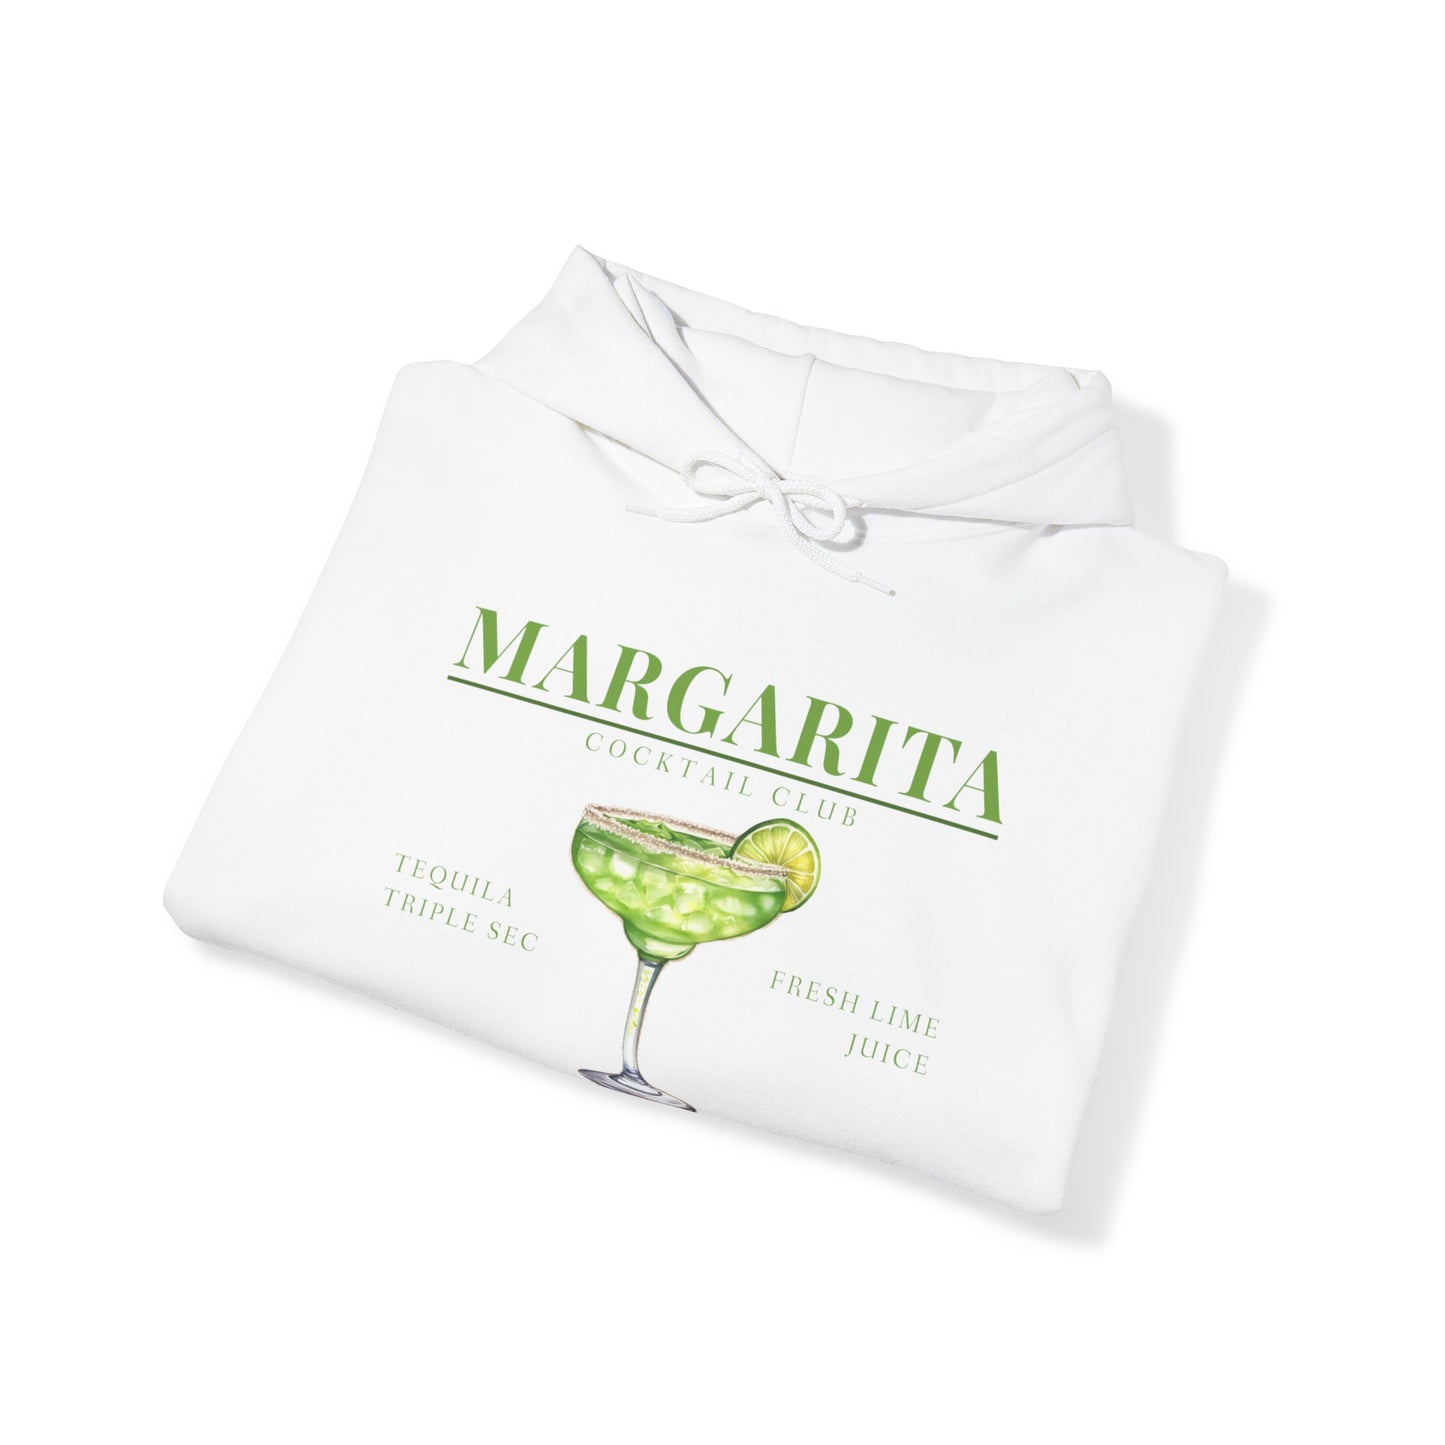 Margarita Cocktail Club Hooded Sweatshirt